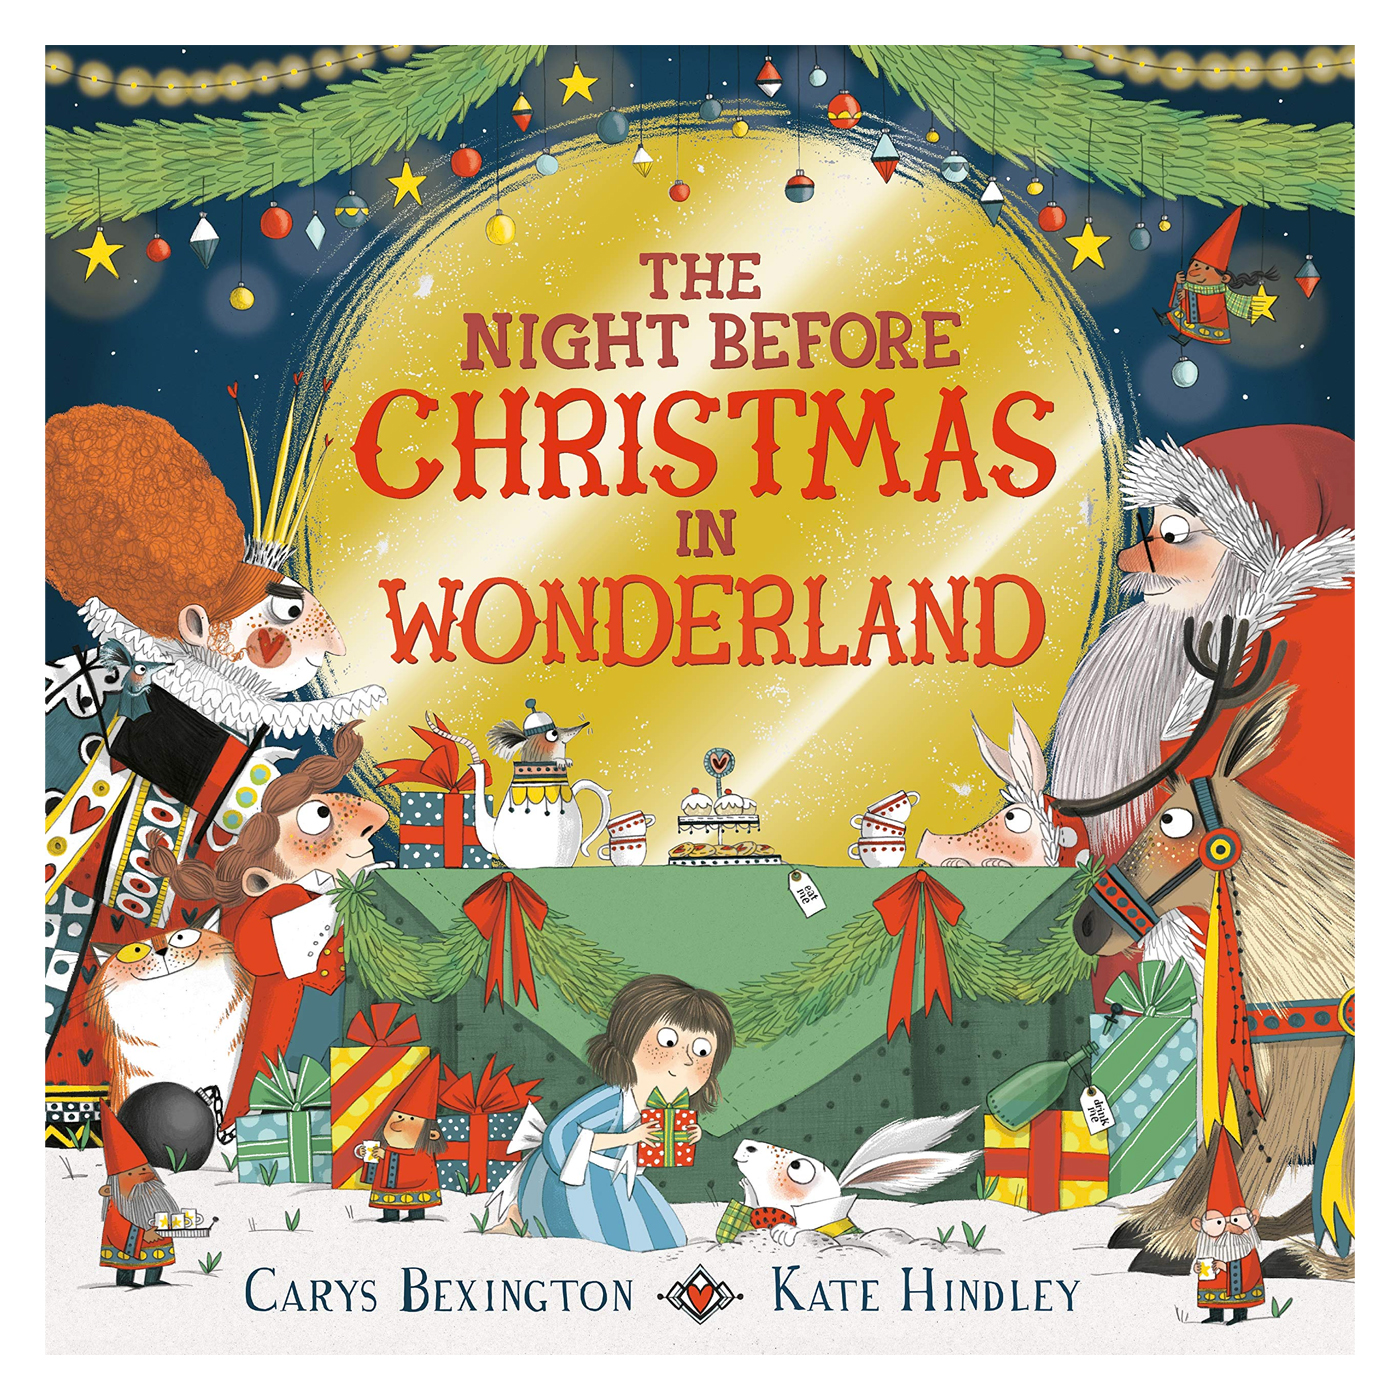  The Night Before Christmas in Wonderland